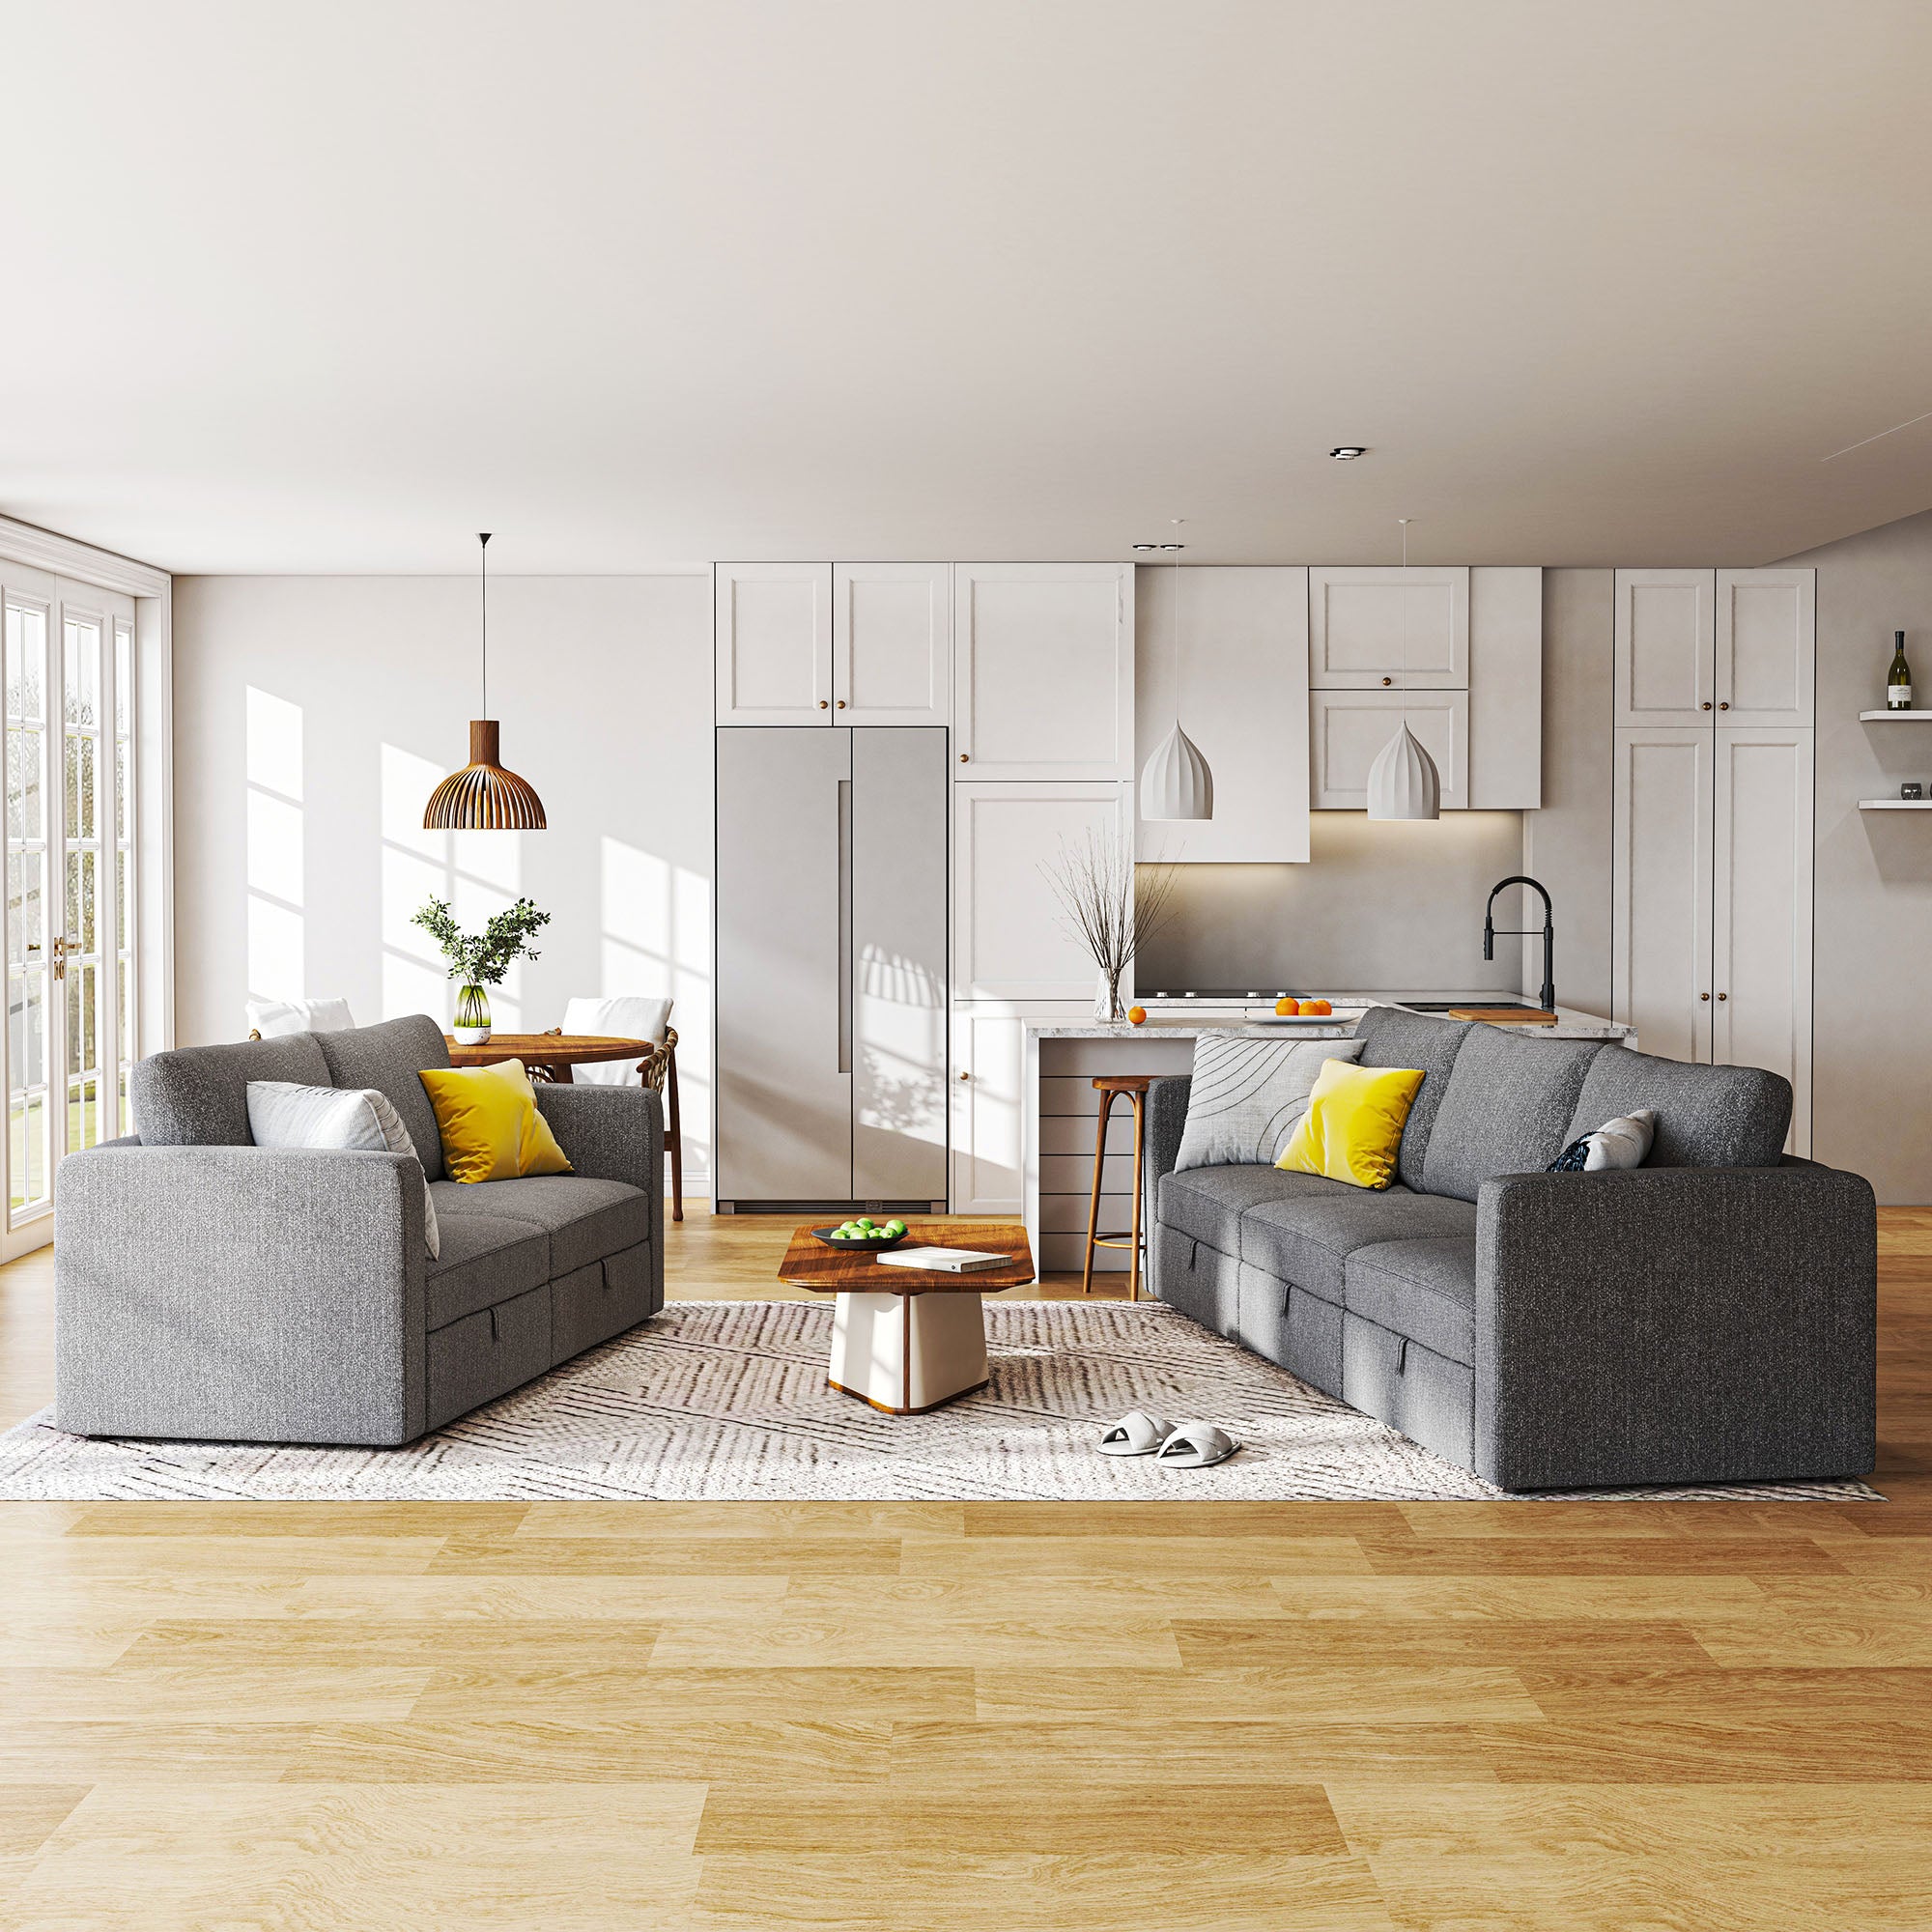 HONBAY Polyester Linen Grey Modular 2+3 Living Room Sofa Set with Hidden Storage Space